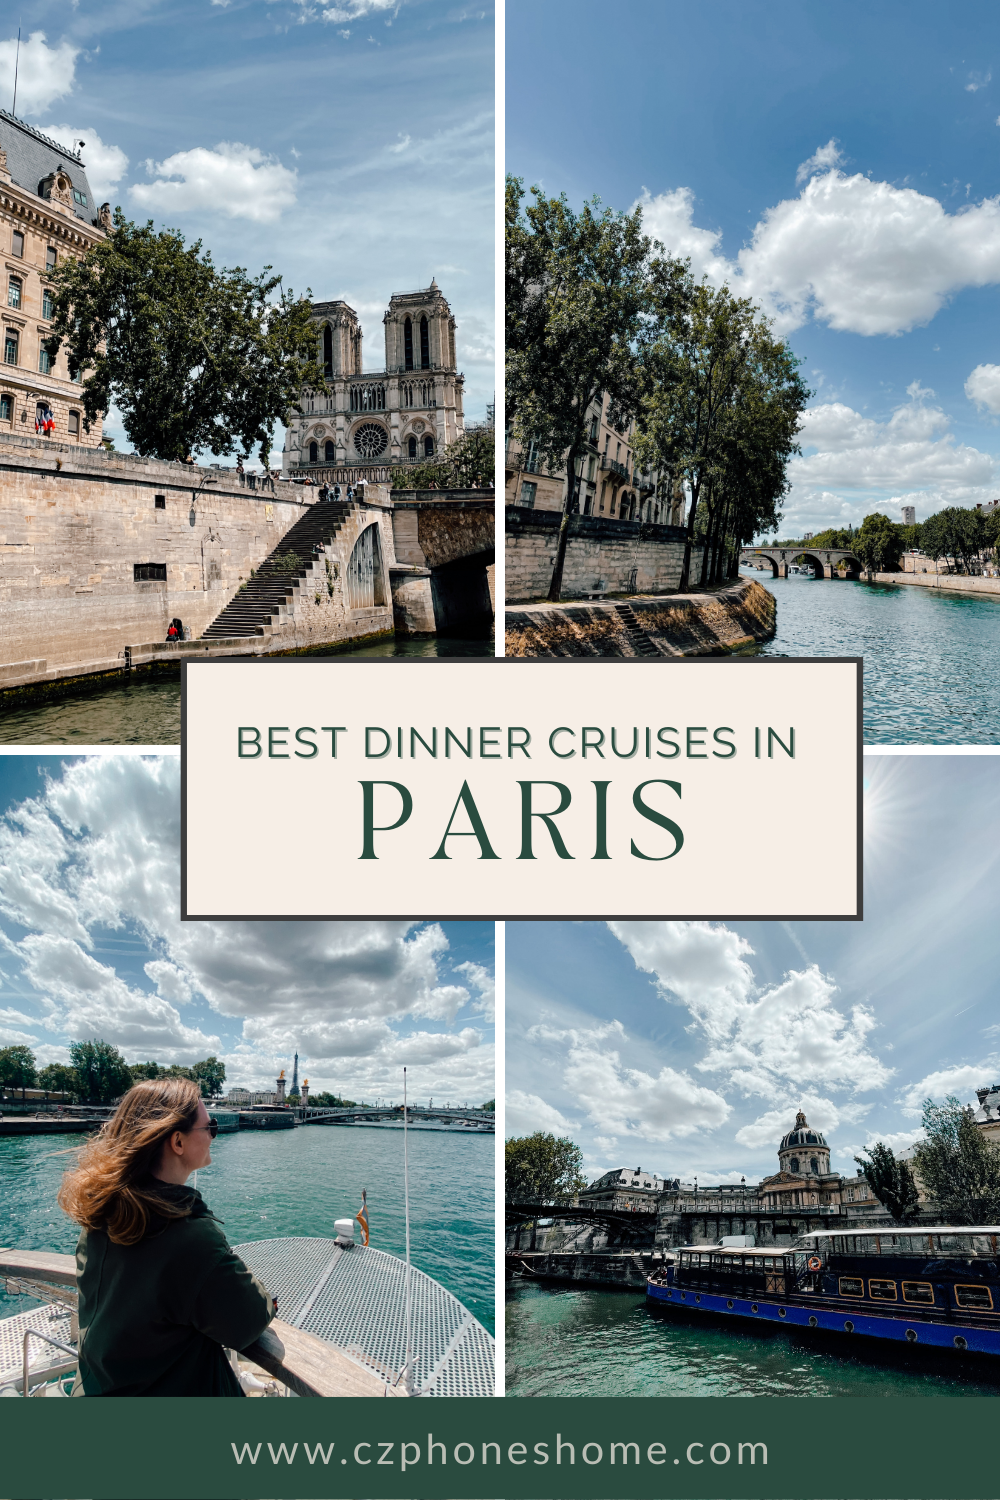 Paris Seine Dinner Cruise: which one should I choose?